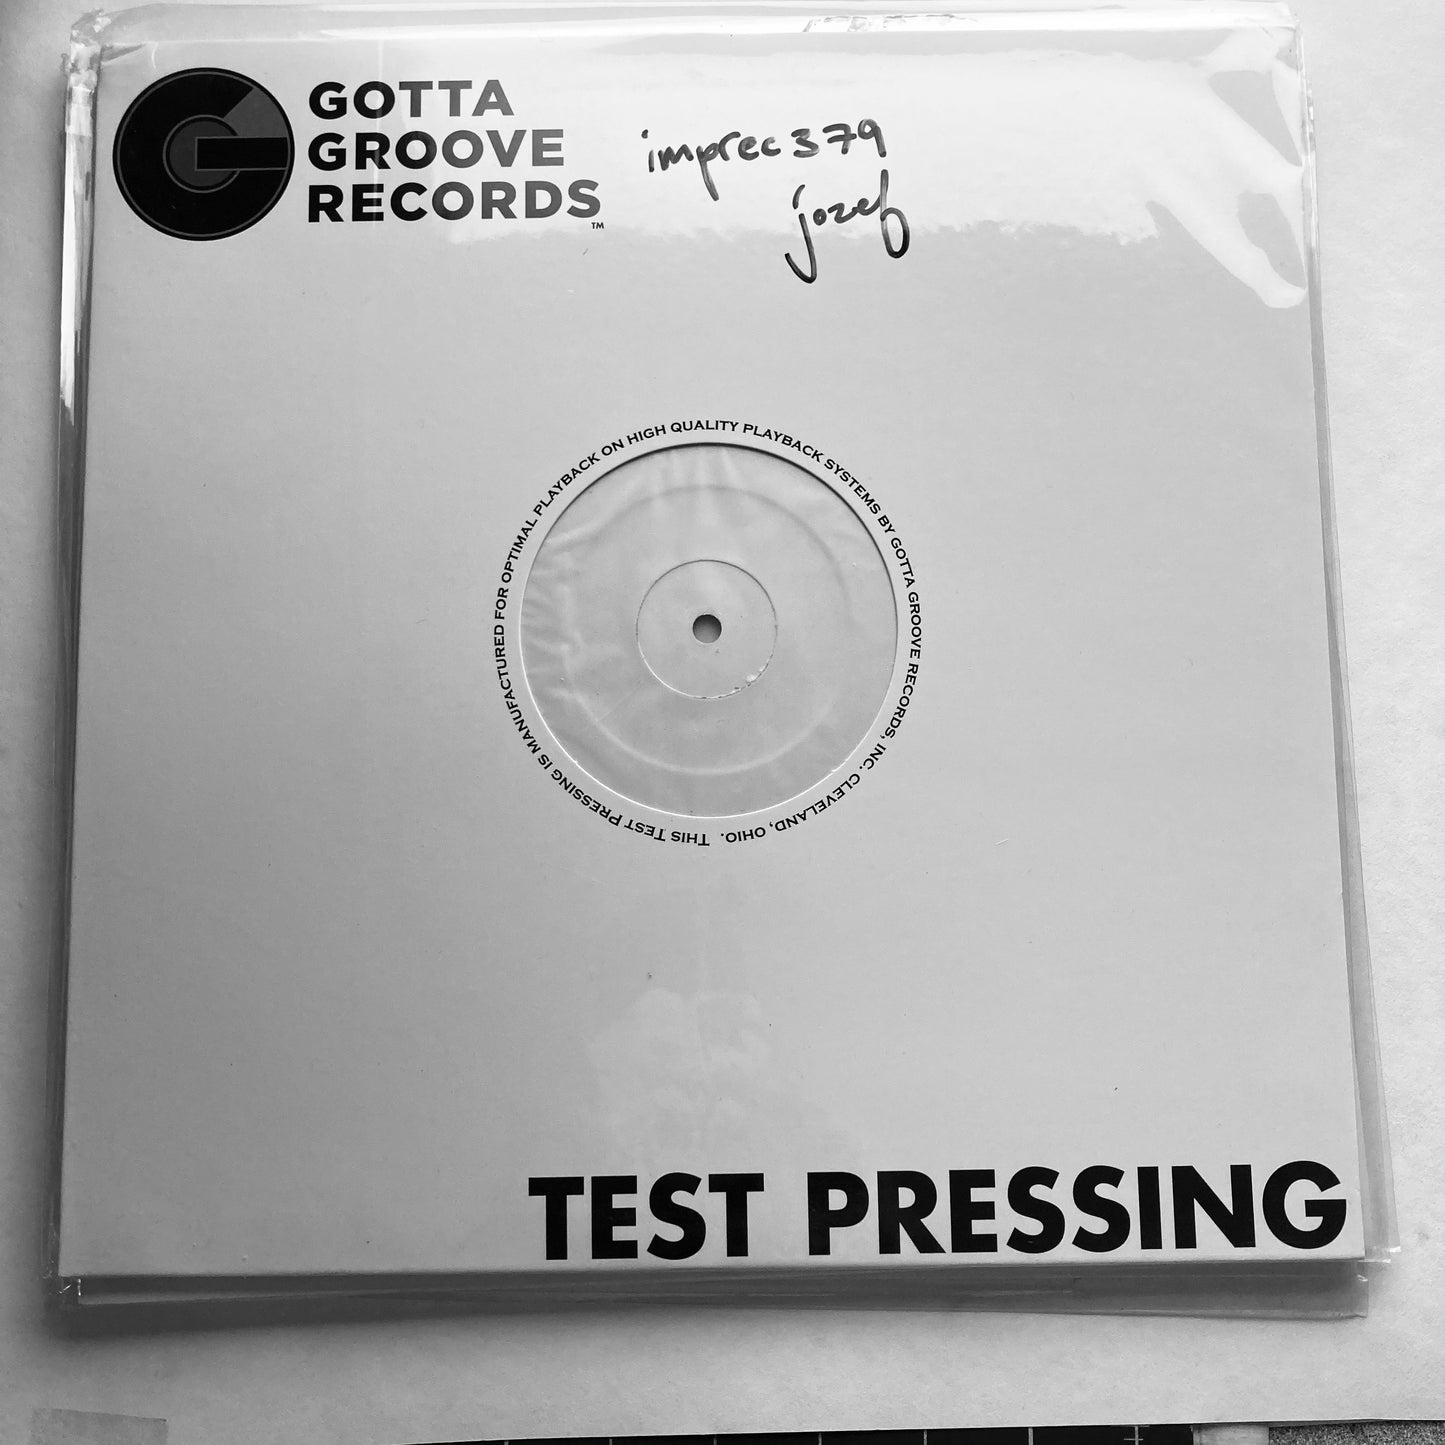 Test Pressing - List 1  (not alphabetized)